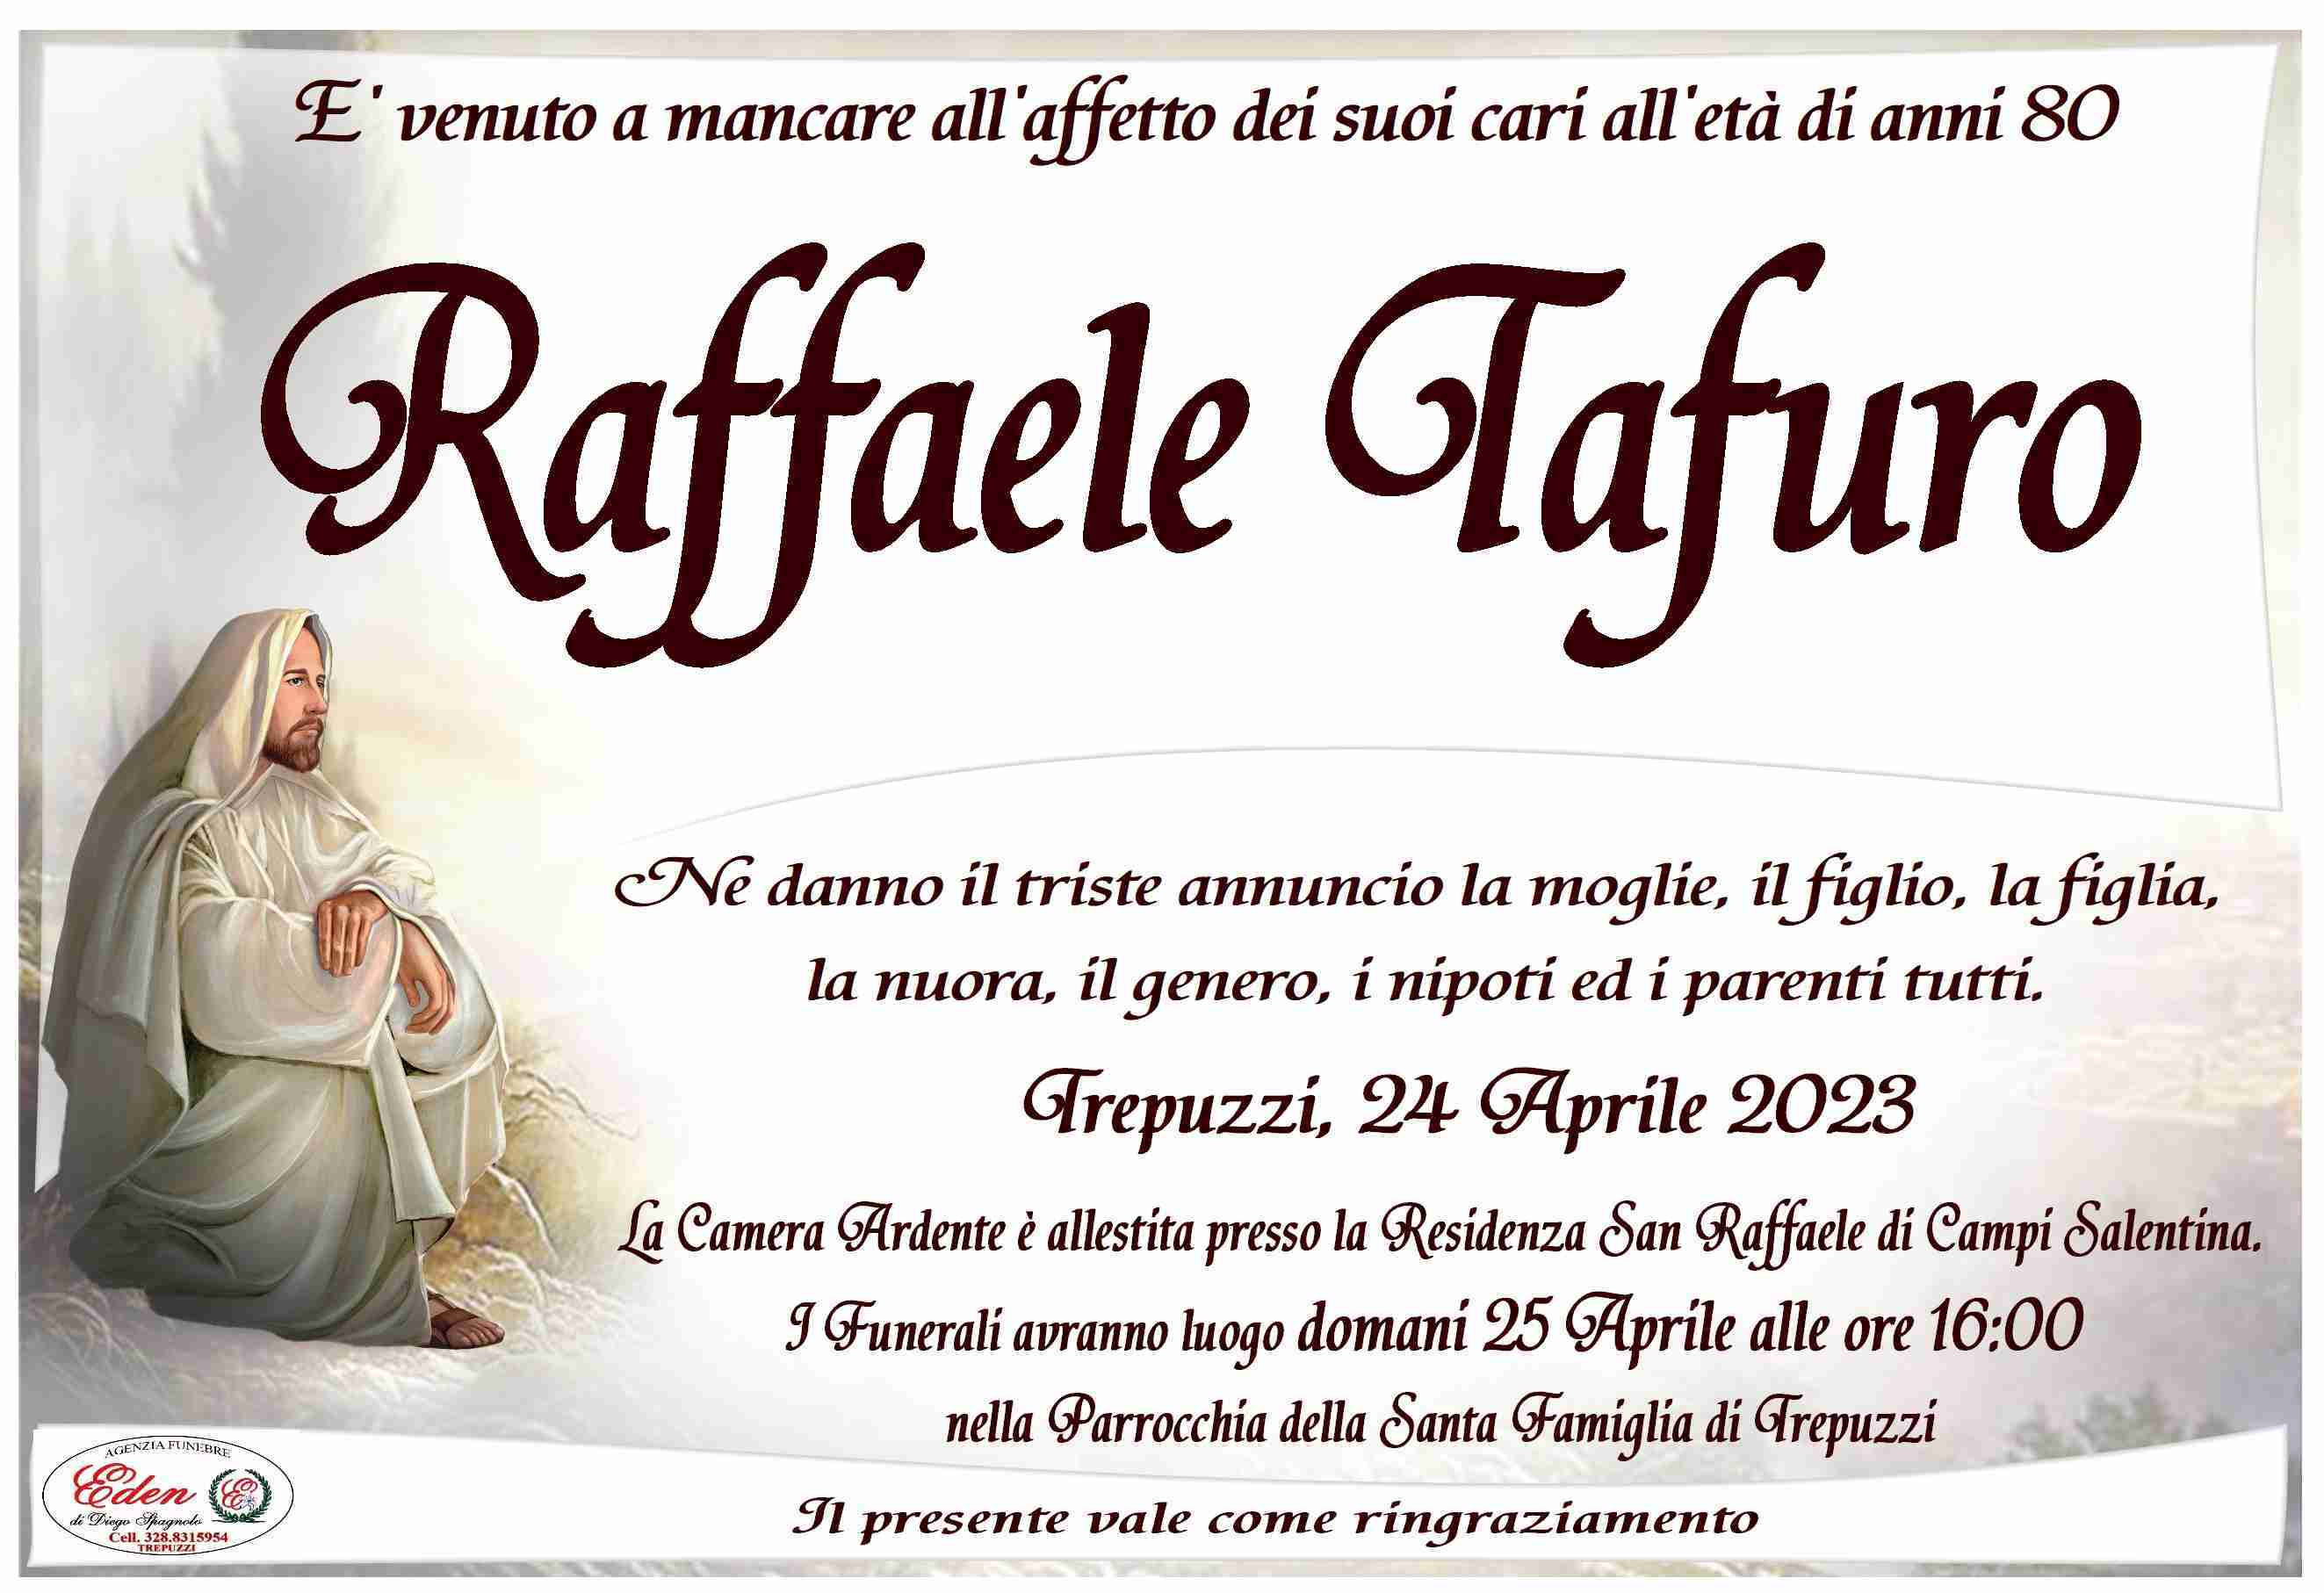 Raffaele Tafuro